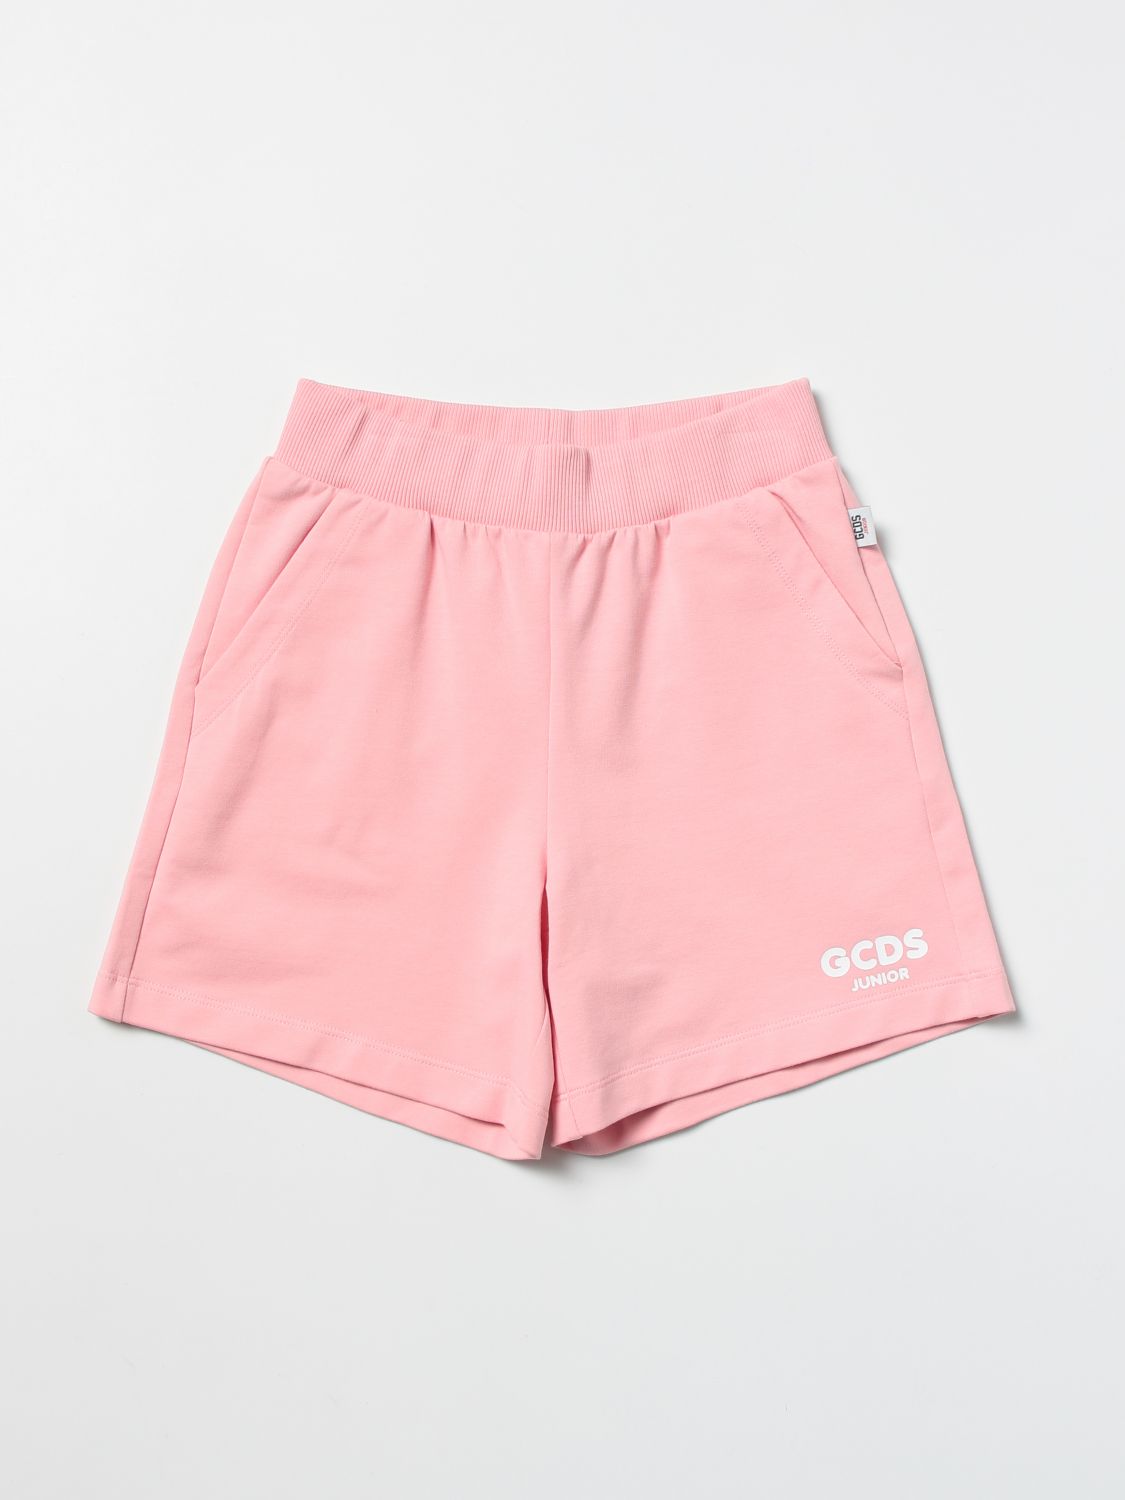 Gcds Short  Kids In Blush Pink